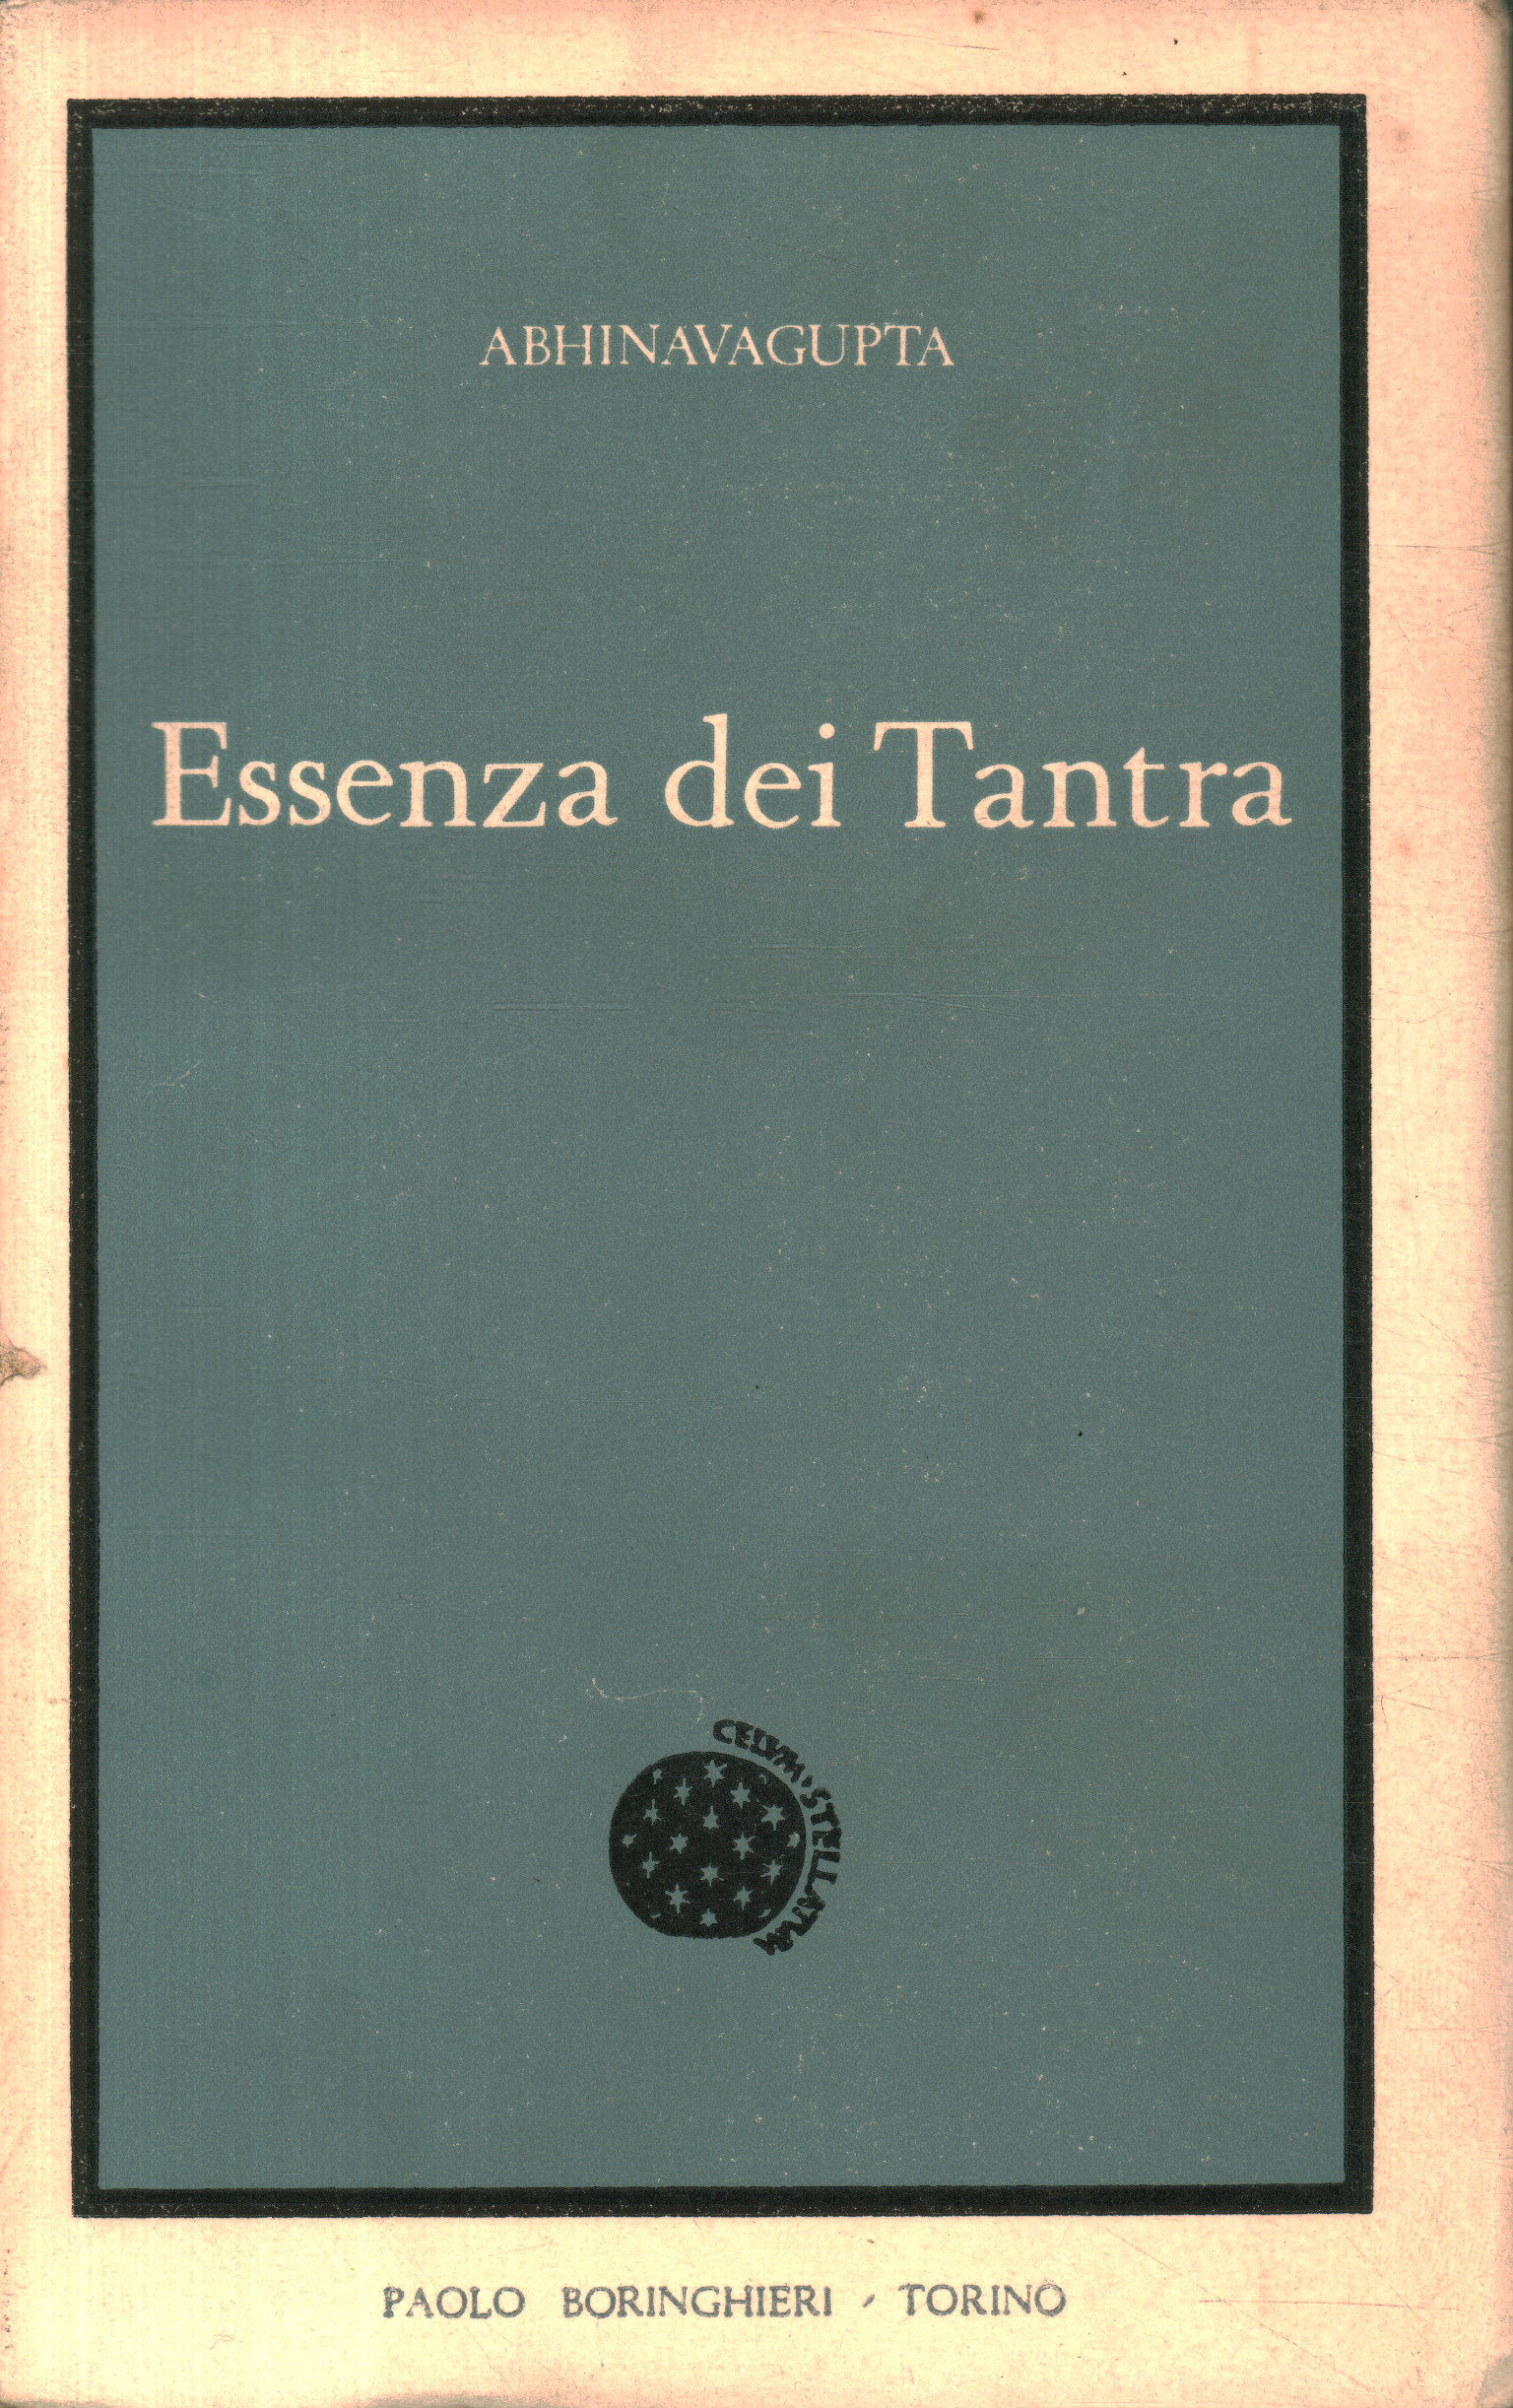 Essence of Tantras